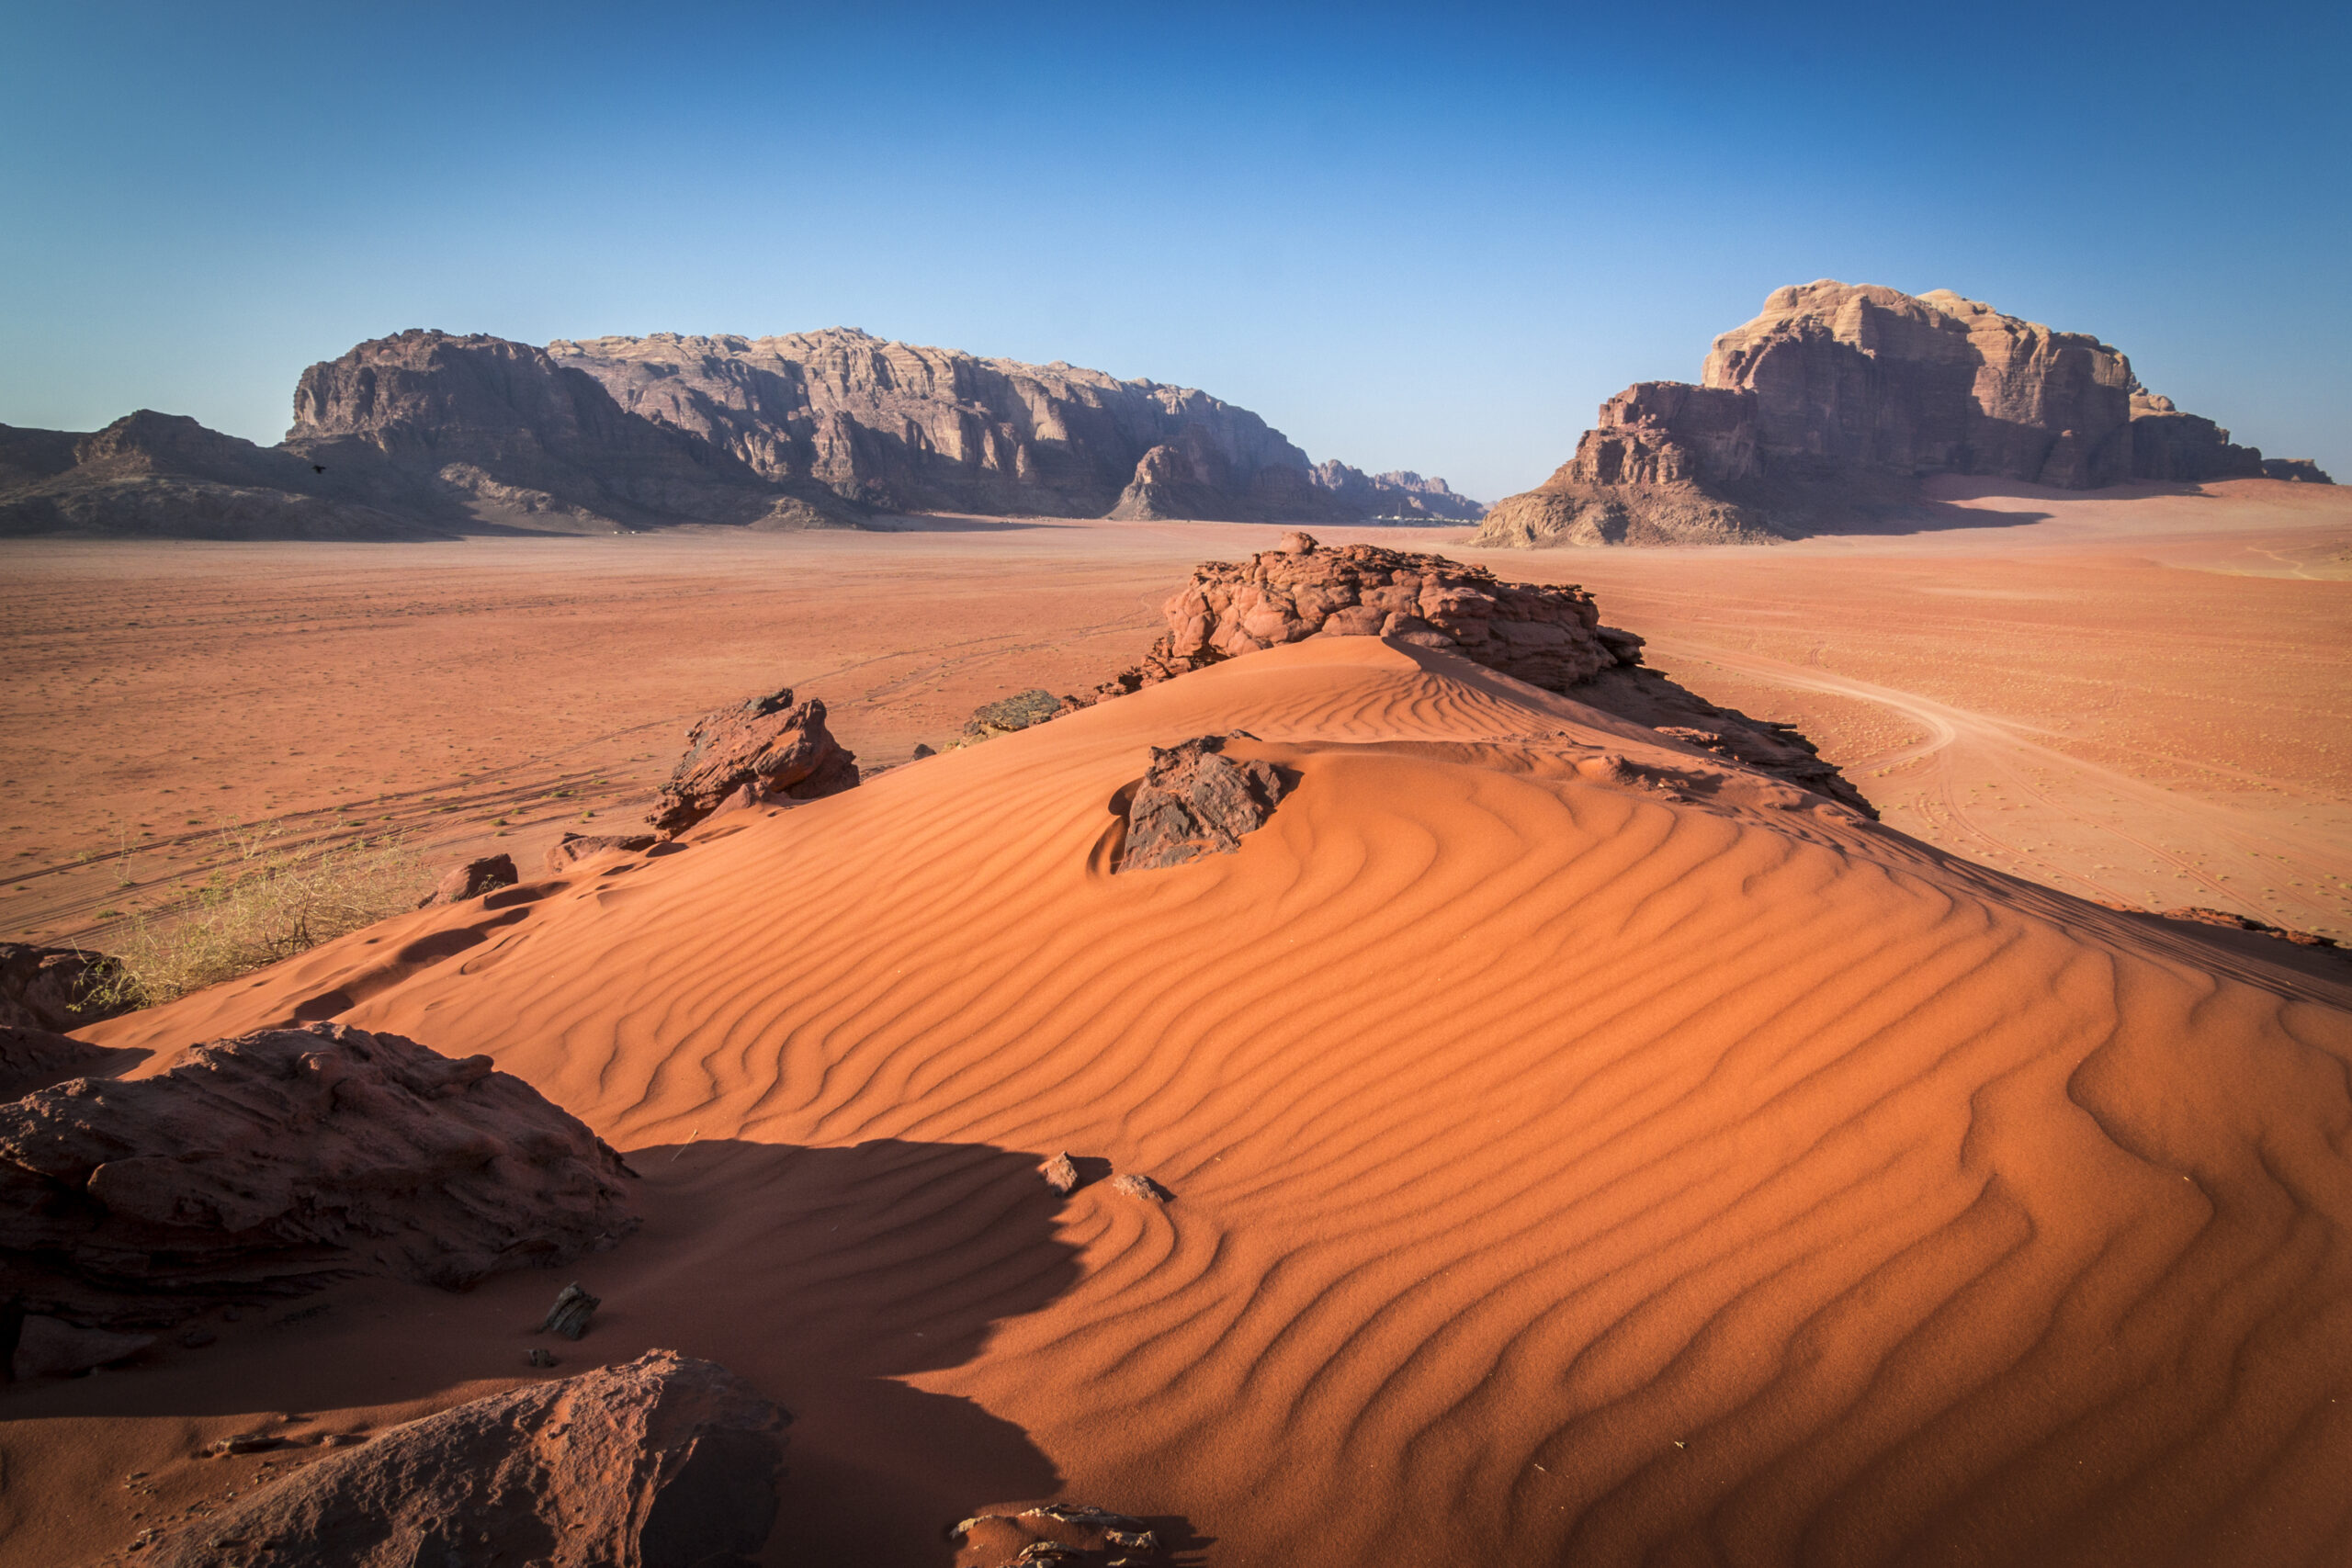 Red sand in Wadi Rum. Middle East, Travel, No People, Scenics, Heat - Temperature, Red, Wadi Rum, Jordan - Middle East, Arabia, Sunlight, Rock - Object, Sand, Sand Dune, Desert, Landscape, Sun, blue sky, UNESCO World Heritage Site.